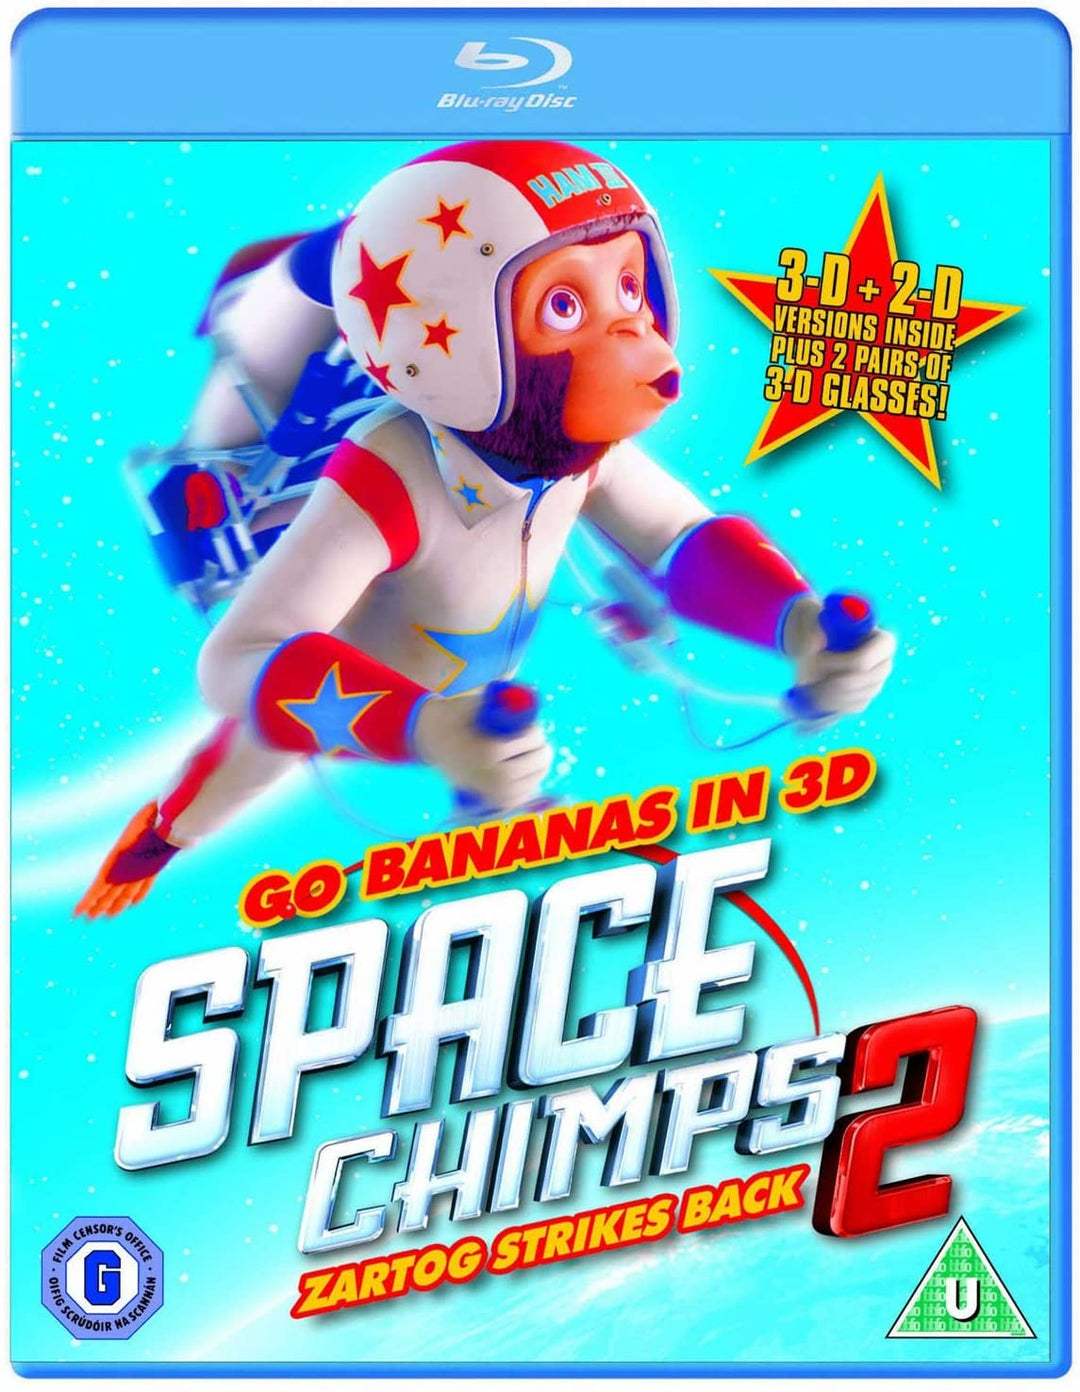 Space Chimps 2 - Zartog Strikes Back [Blu-ray]